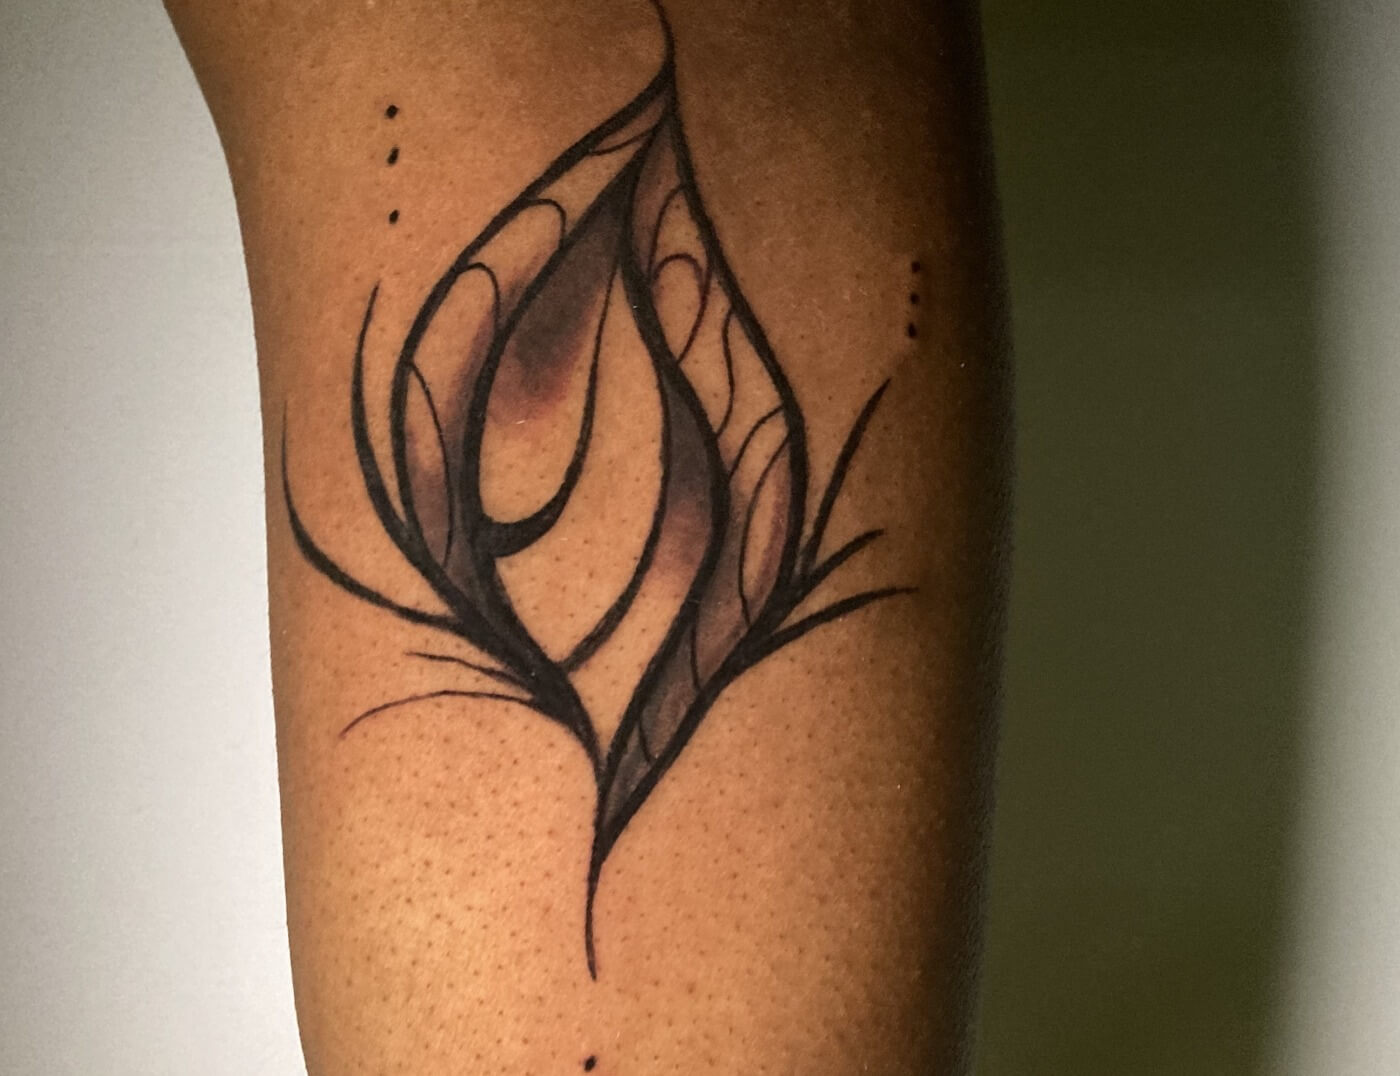 Razor Blade Tattoo Meaning and Symbolism - Tatticle